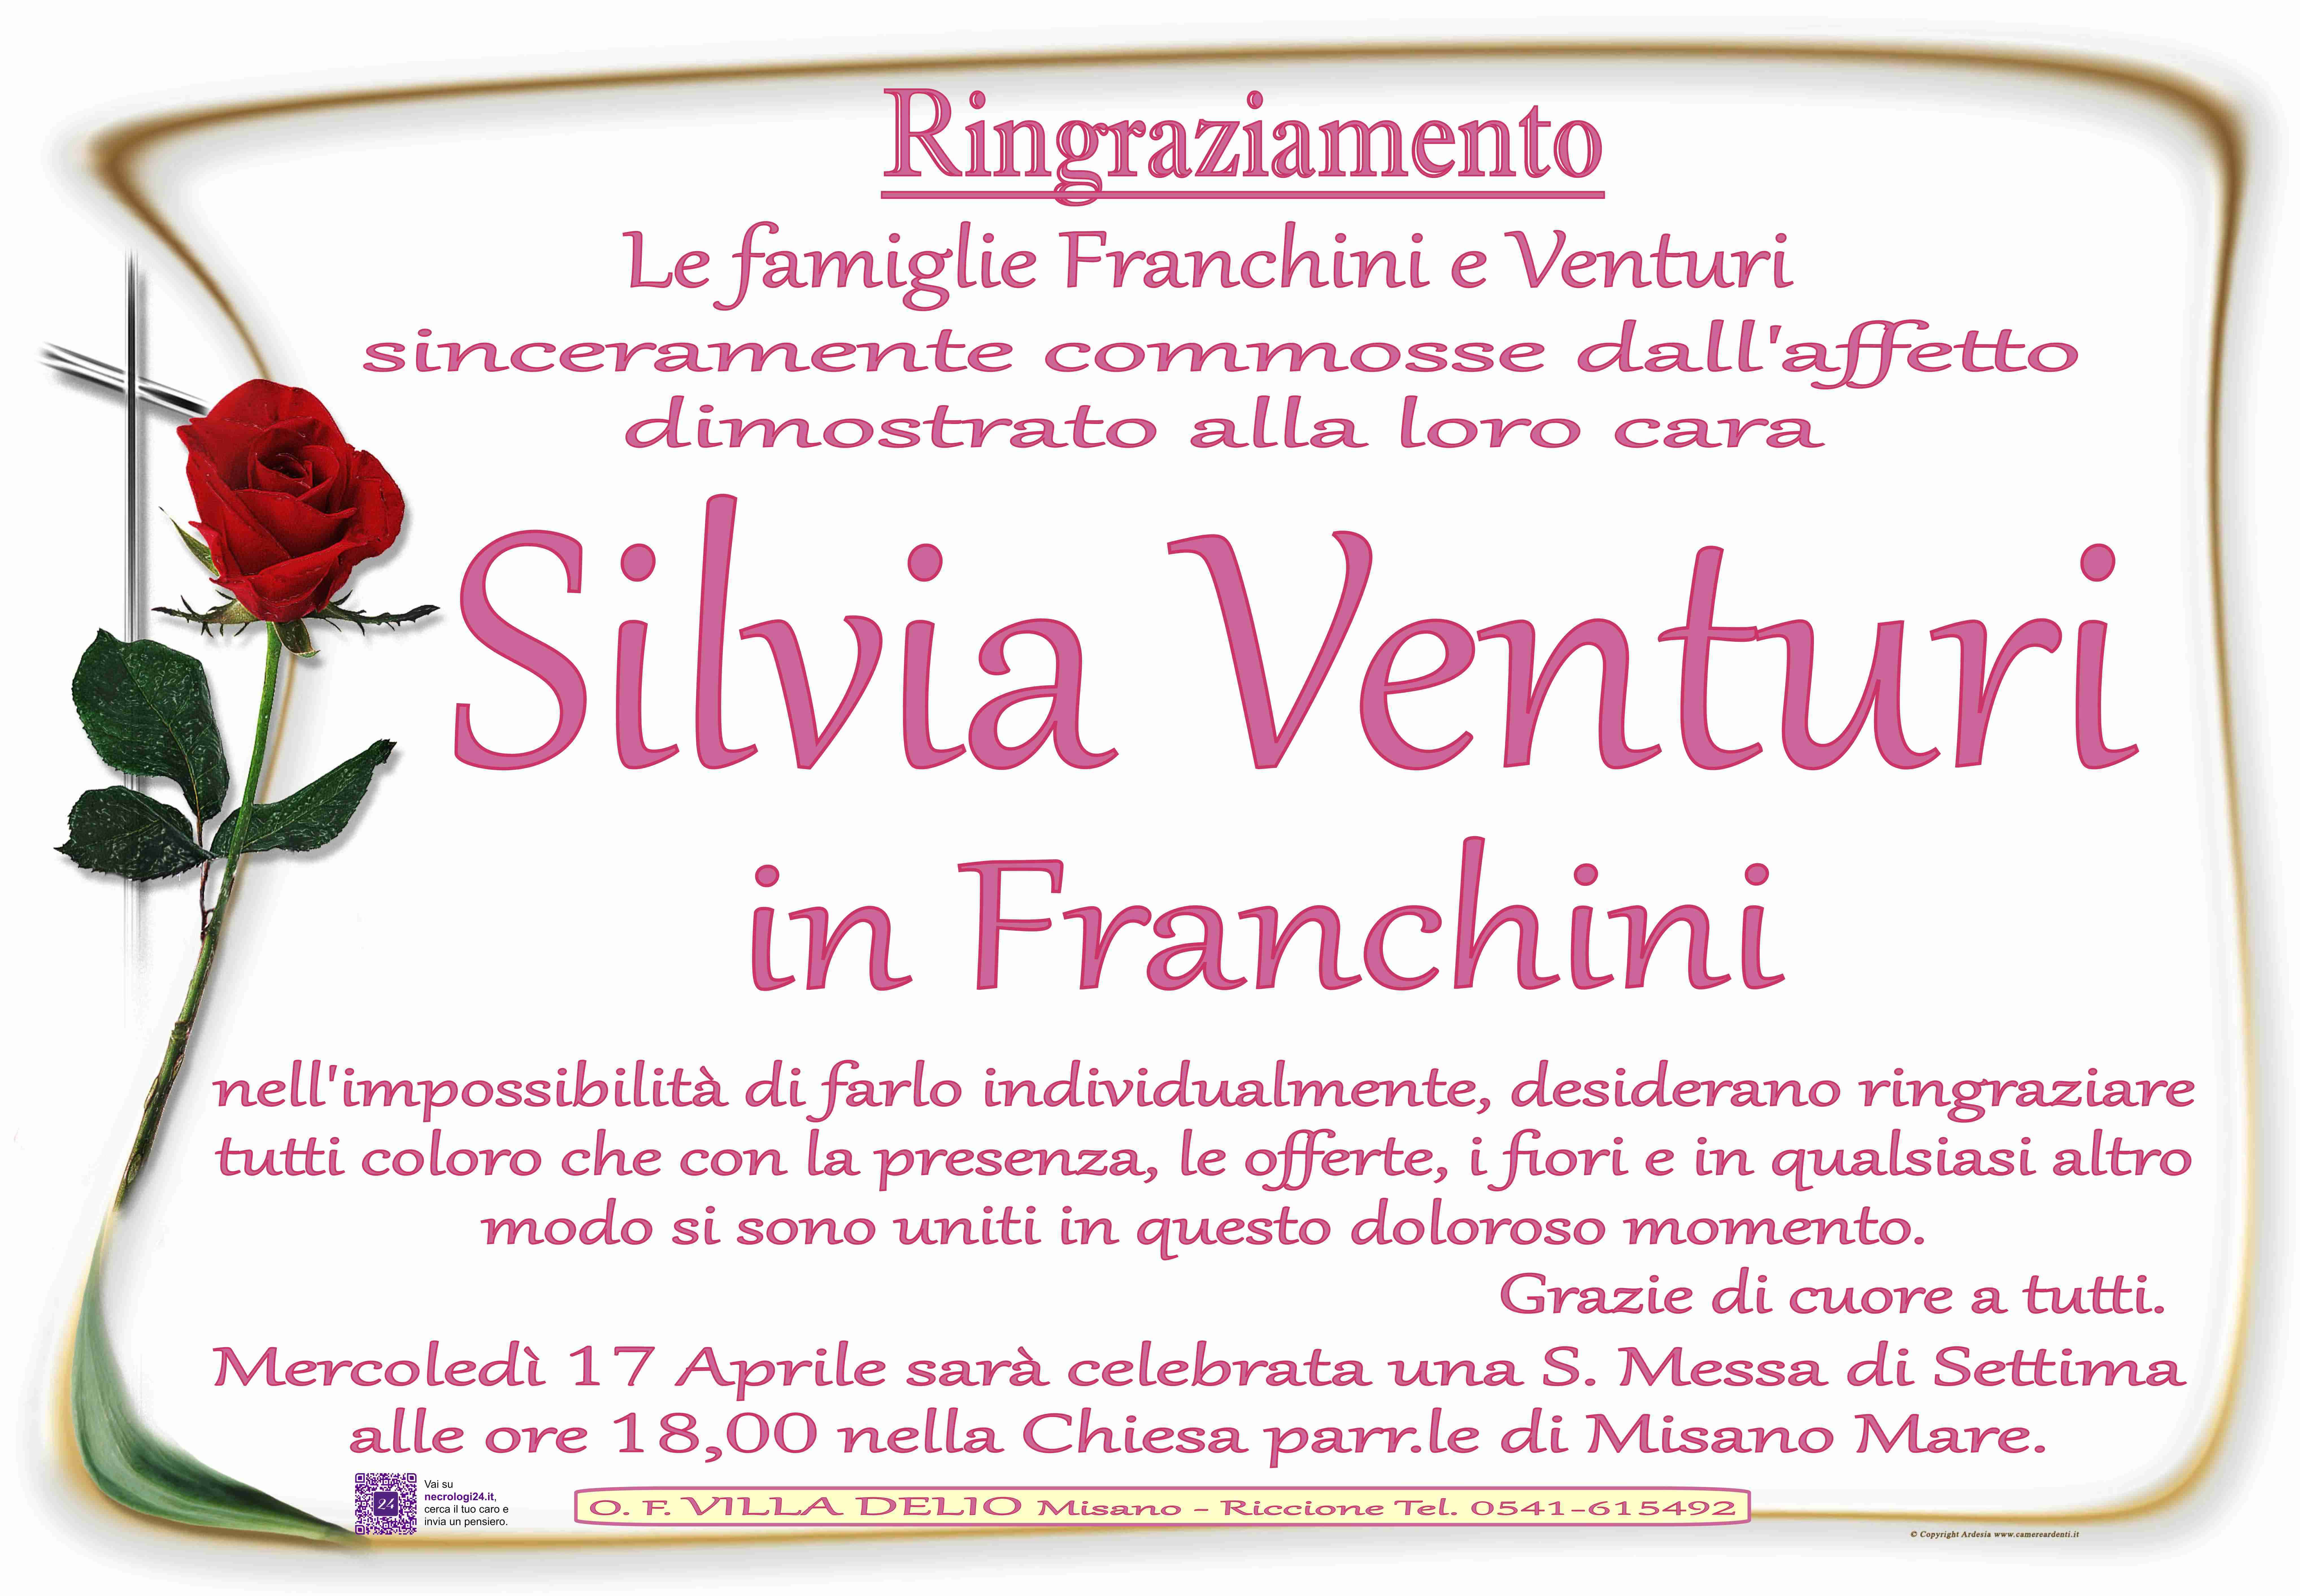 Silvia Venturi